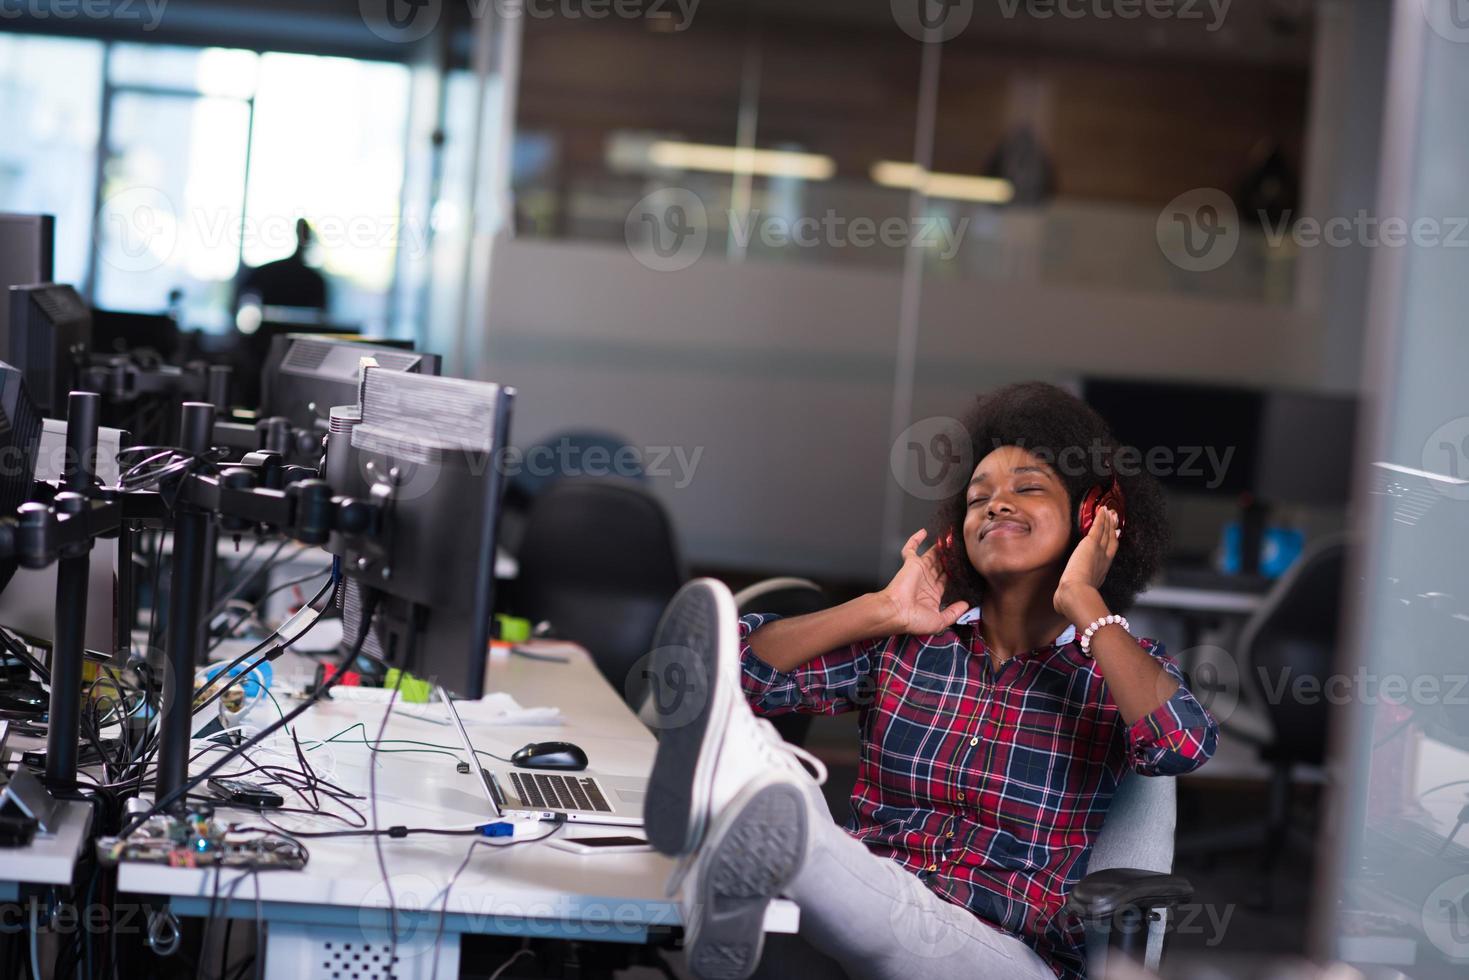 retrato de una joven afroamericana exitosa en una oficina moderna foto